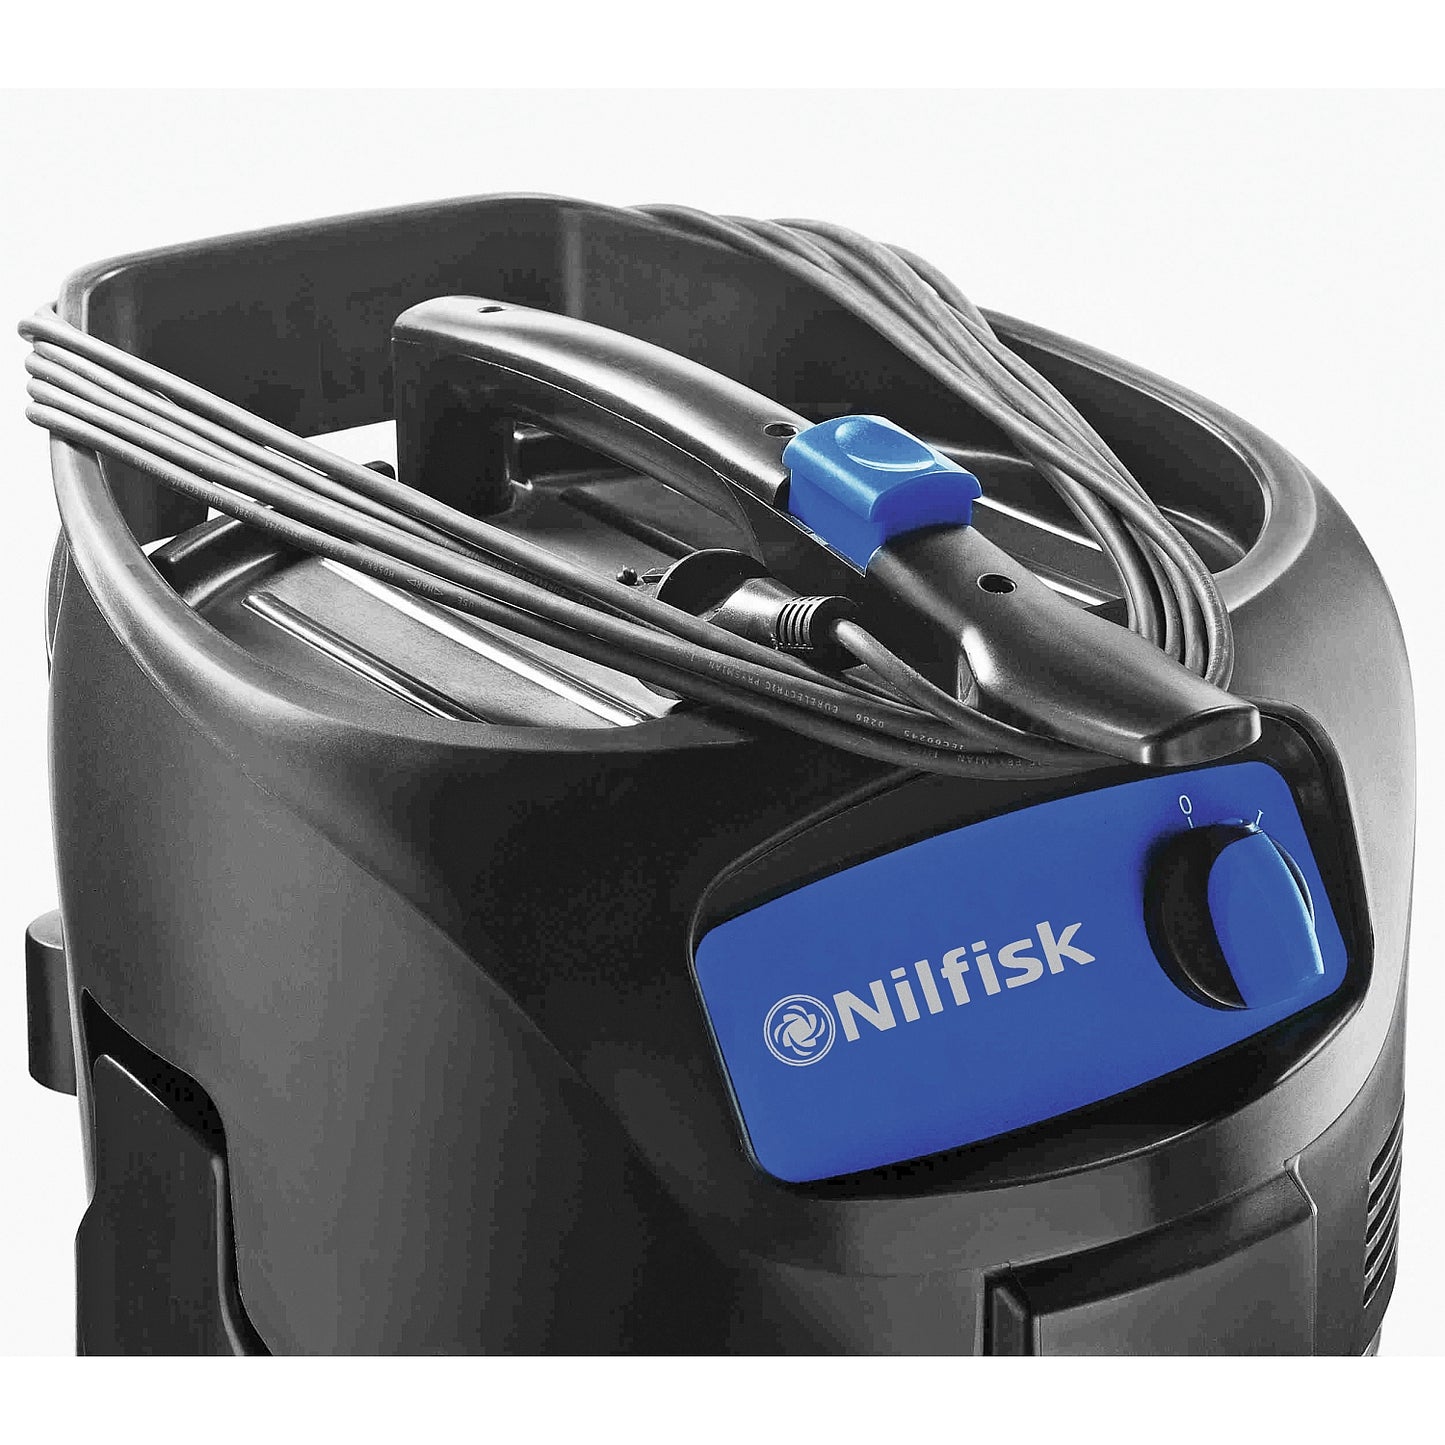 Nilfisk ATTIX 30 8 Gallon Wet/Dry Vacuum with HEPA - Buckhead Vacuums